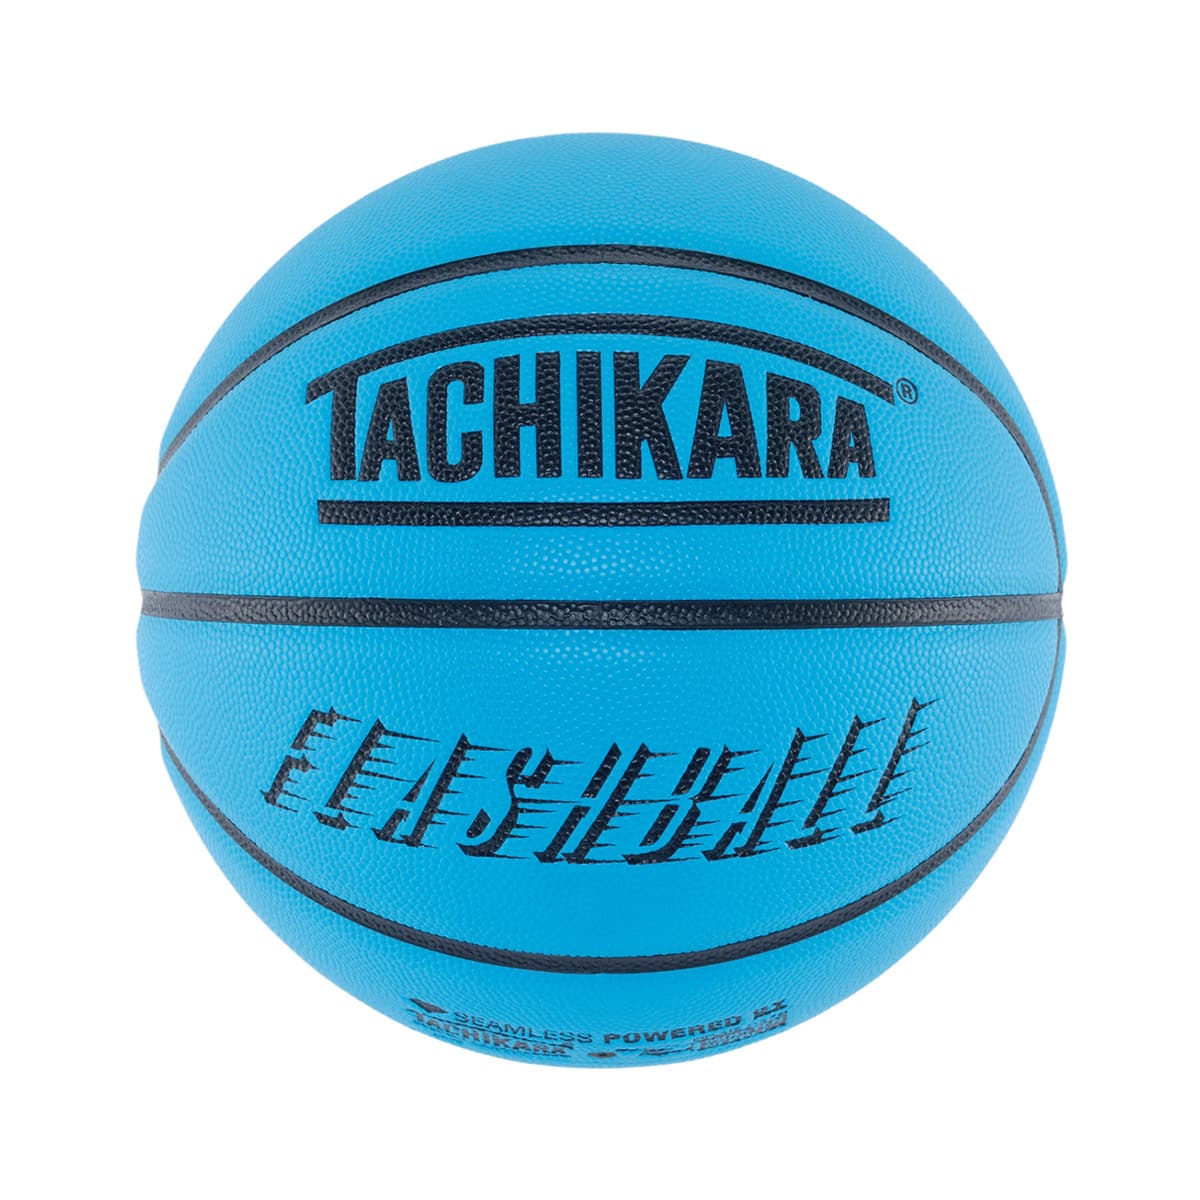 TACHIKARA FLASHBALL BLUE/BLACK 22HO-I